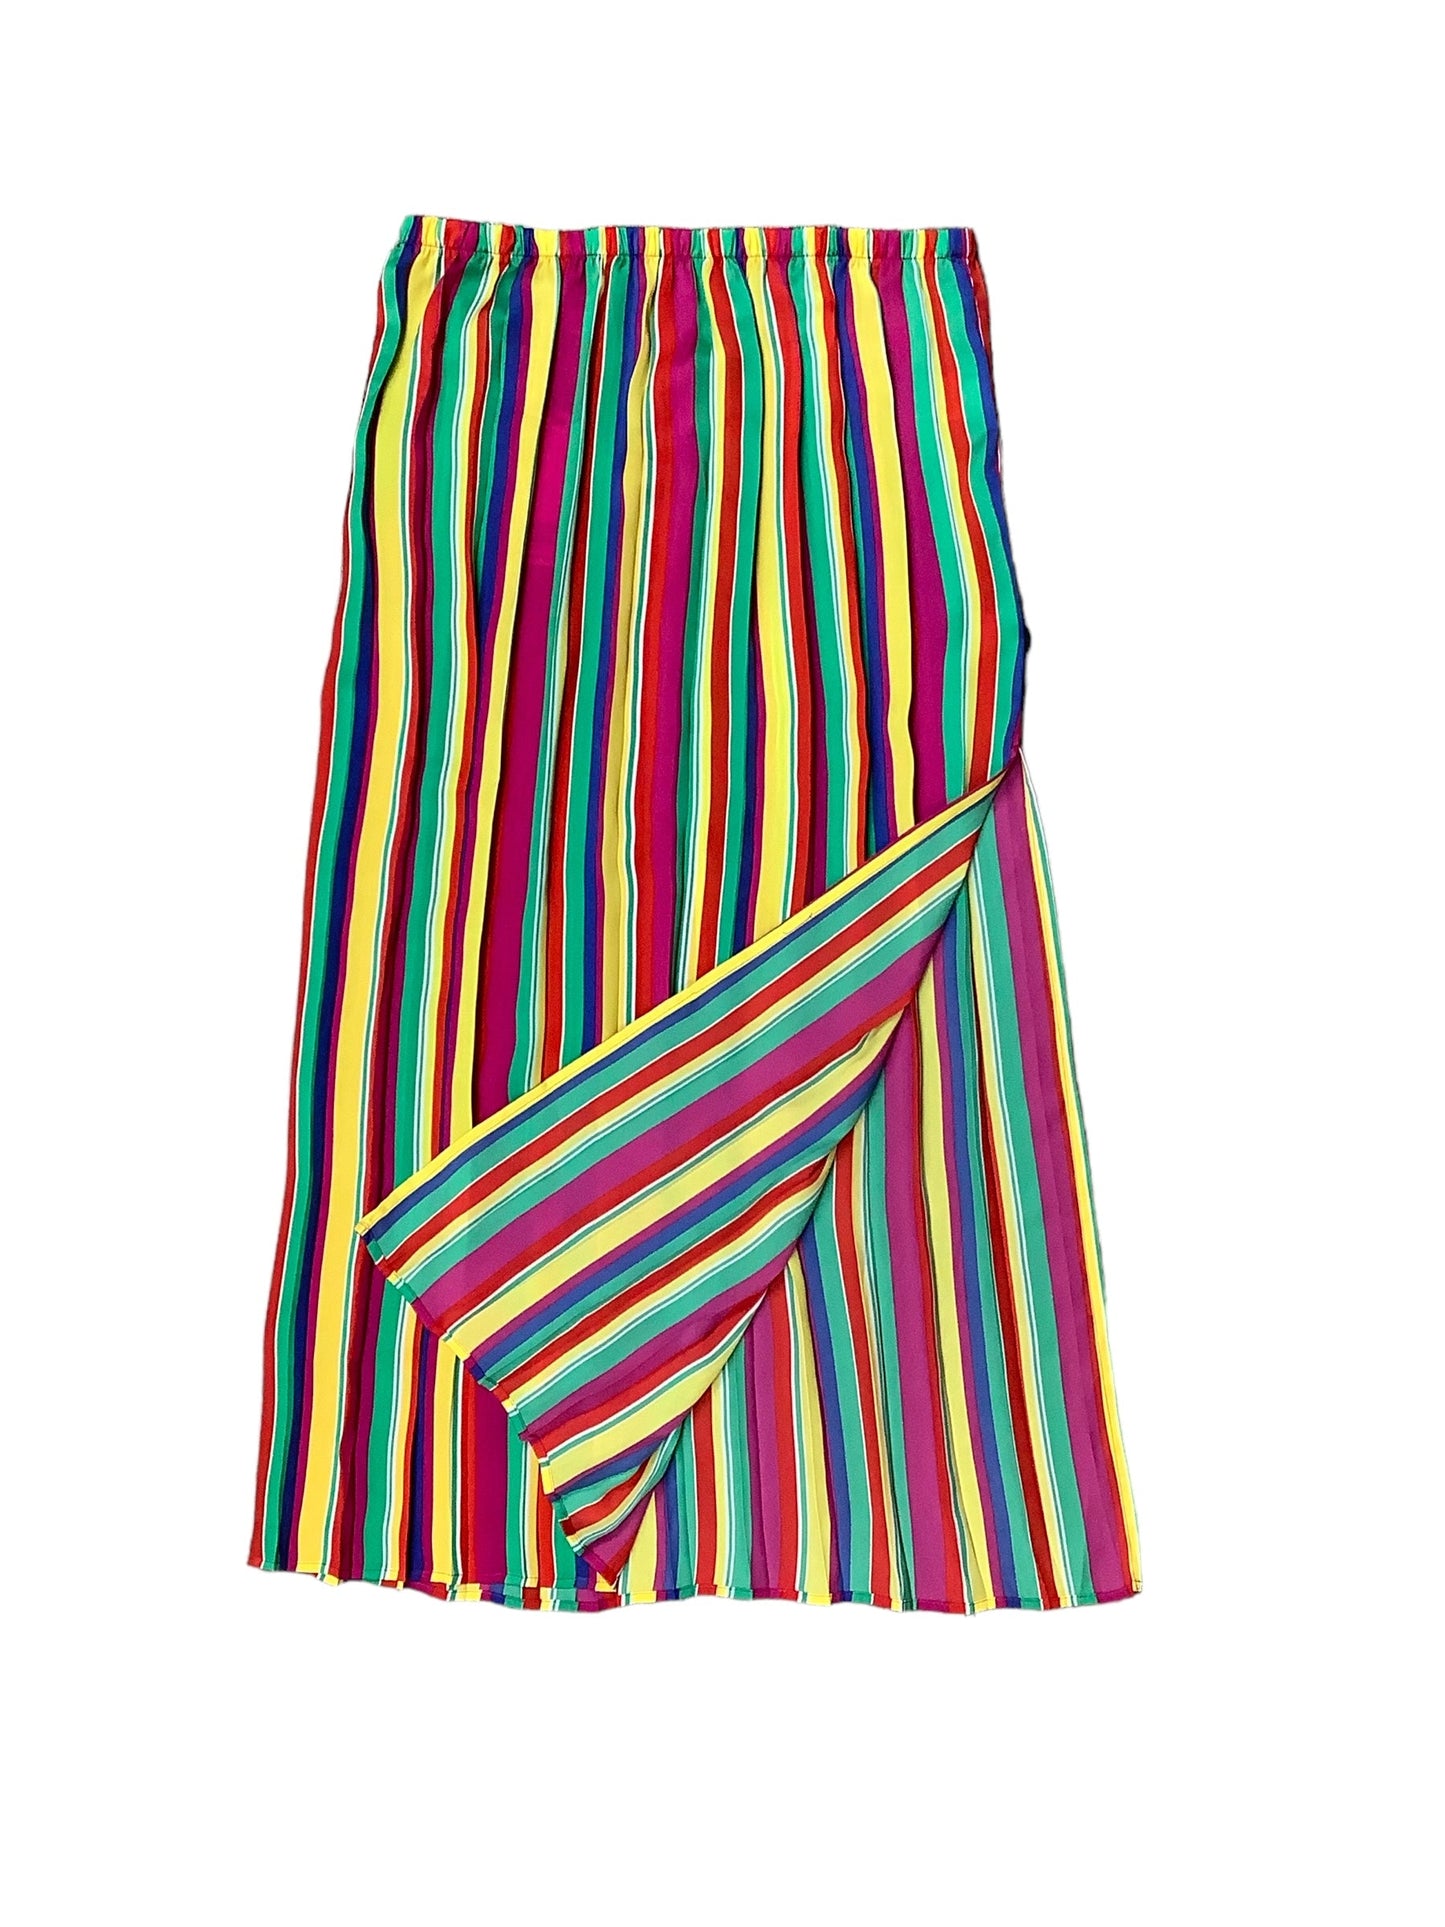 Skirt Maxi By Bb Dakota  Size: M